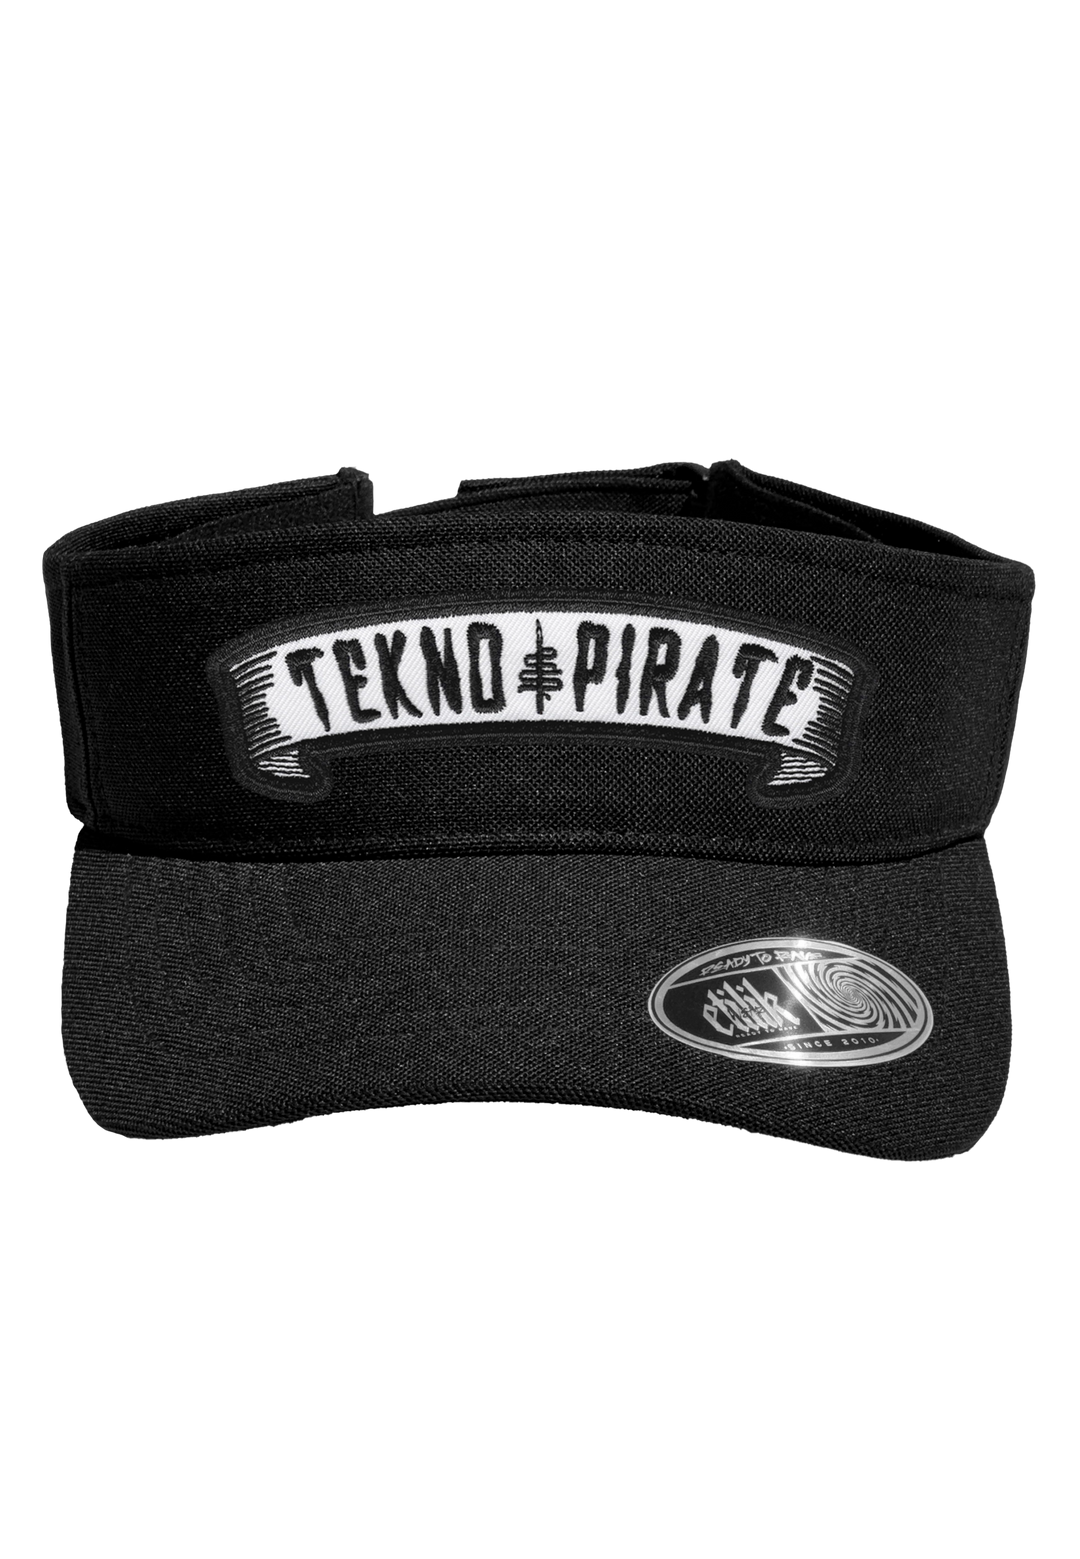 Tekno Pirate - Visor 110 - Etilik Wear 